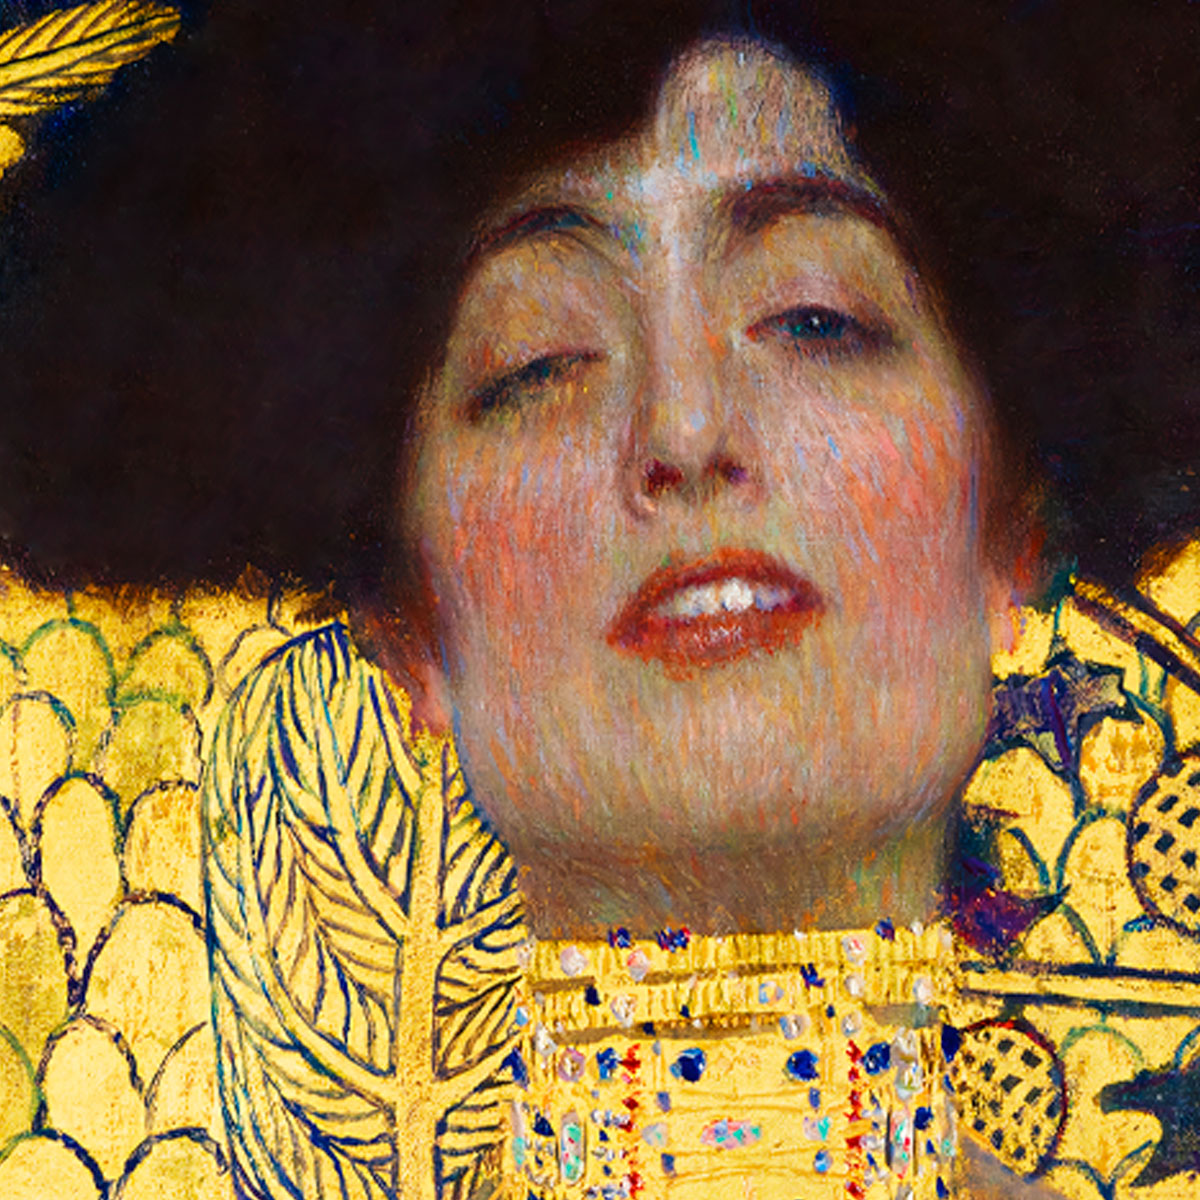 Judith & The Head of Holofernes by Gustav Klimt